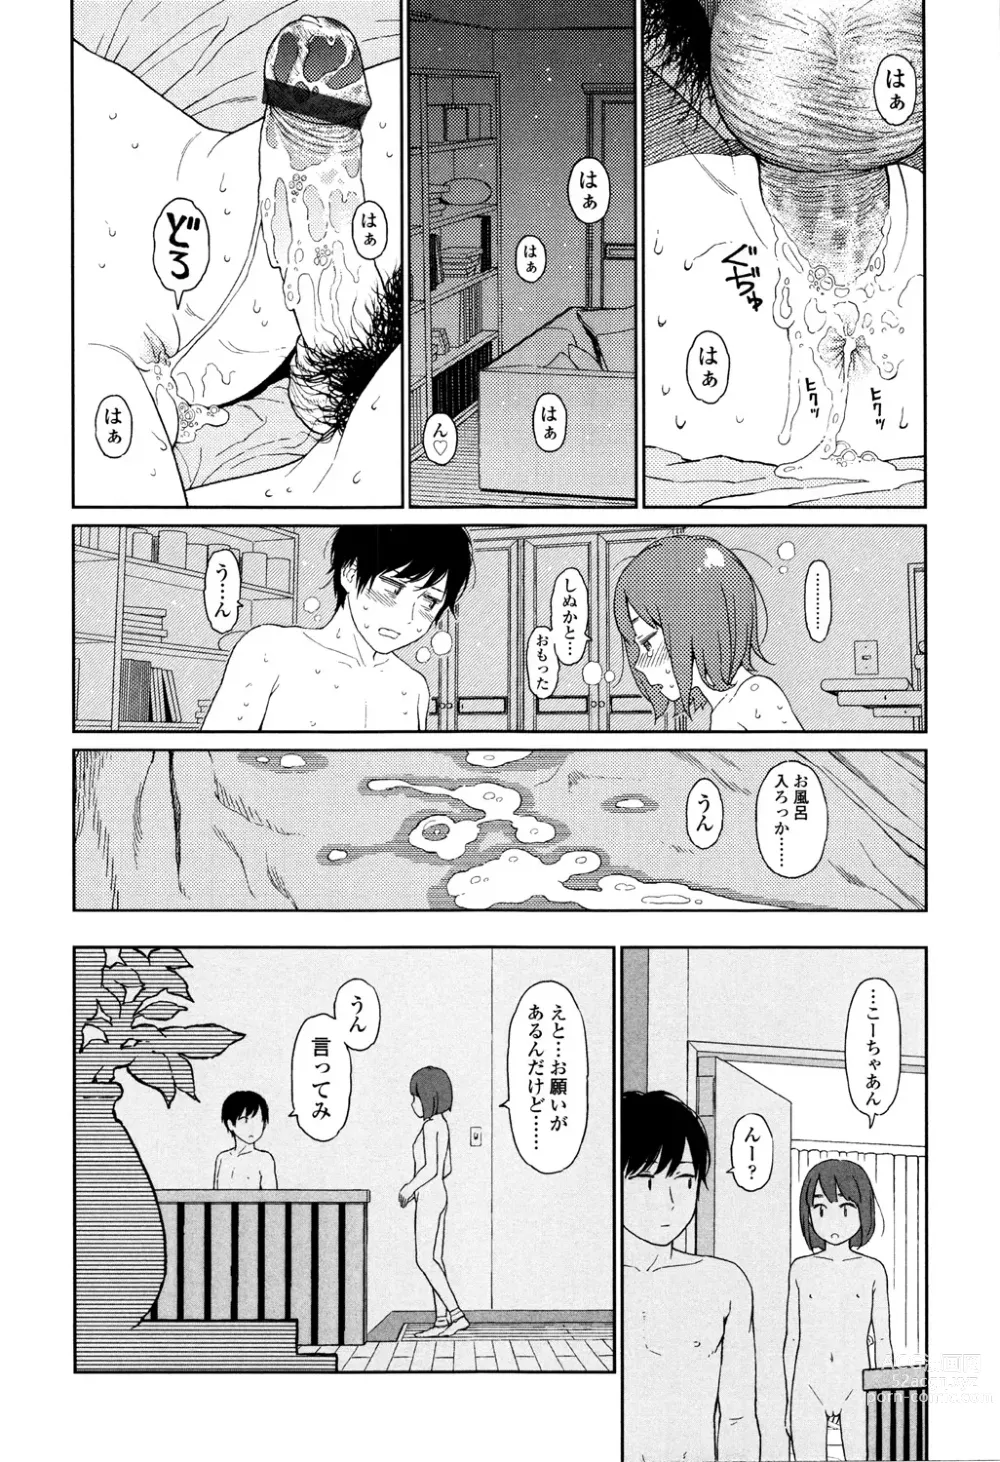 Page 274 of manga Nymphodelic